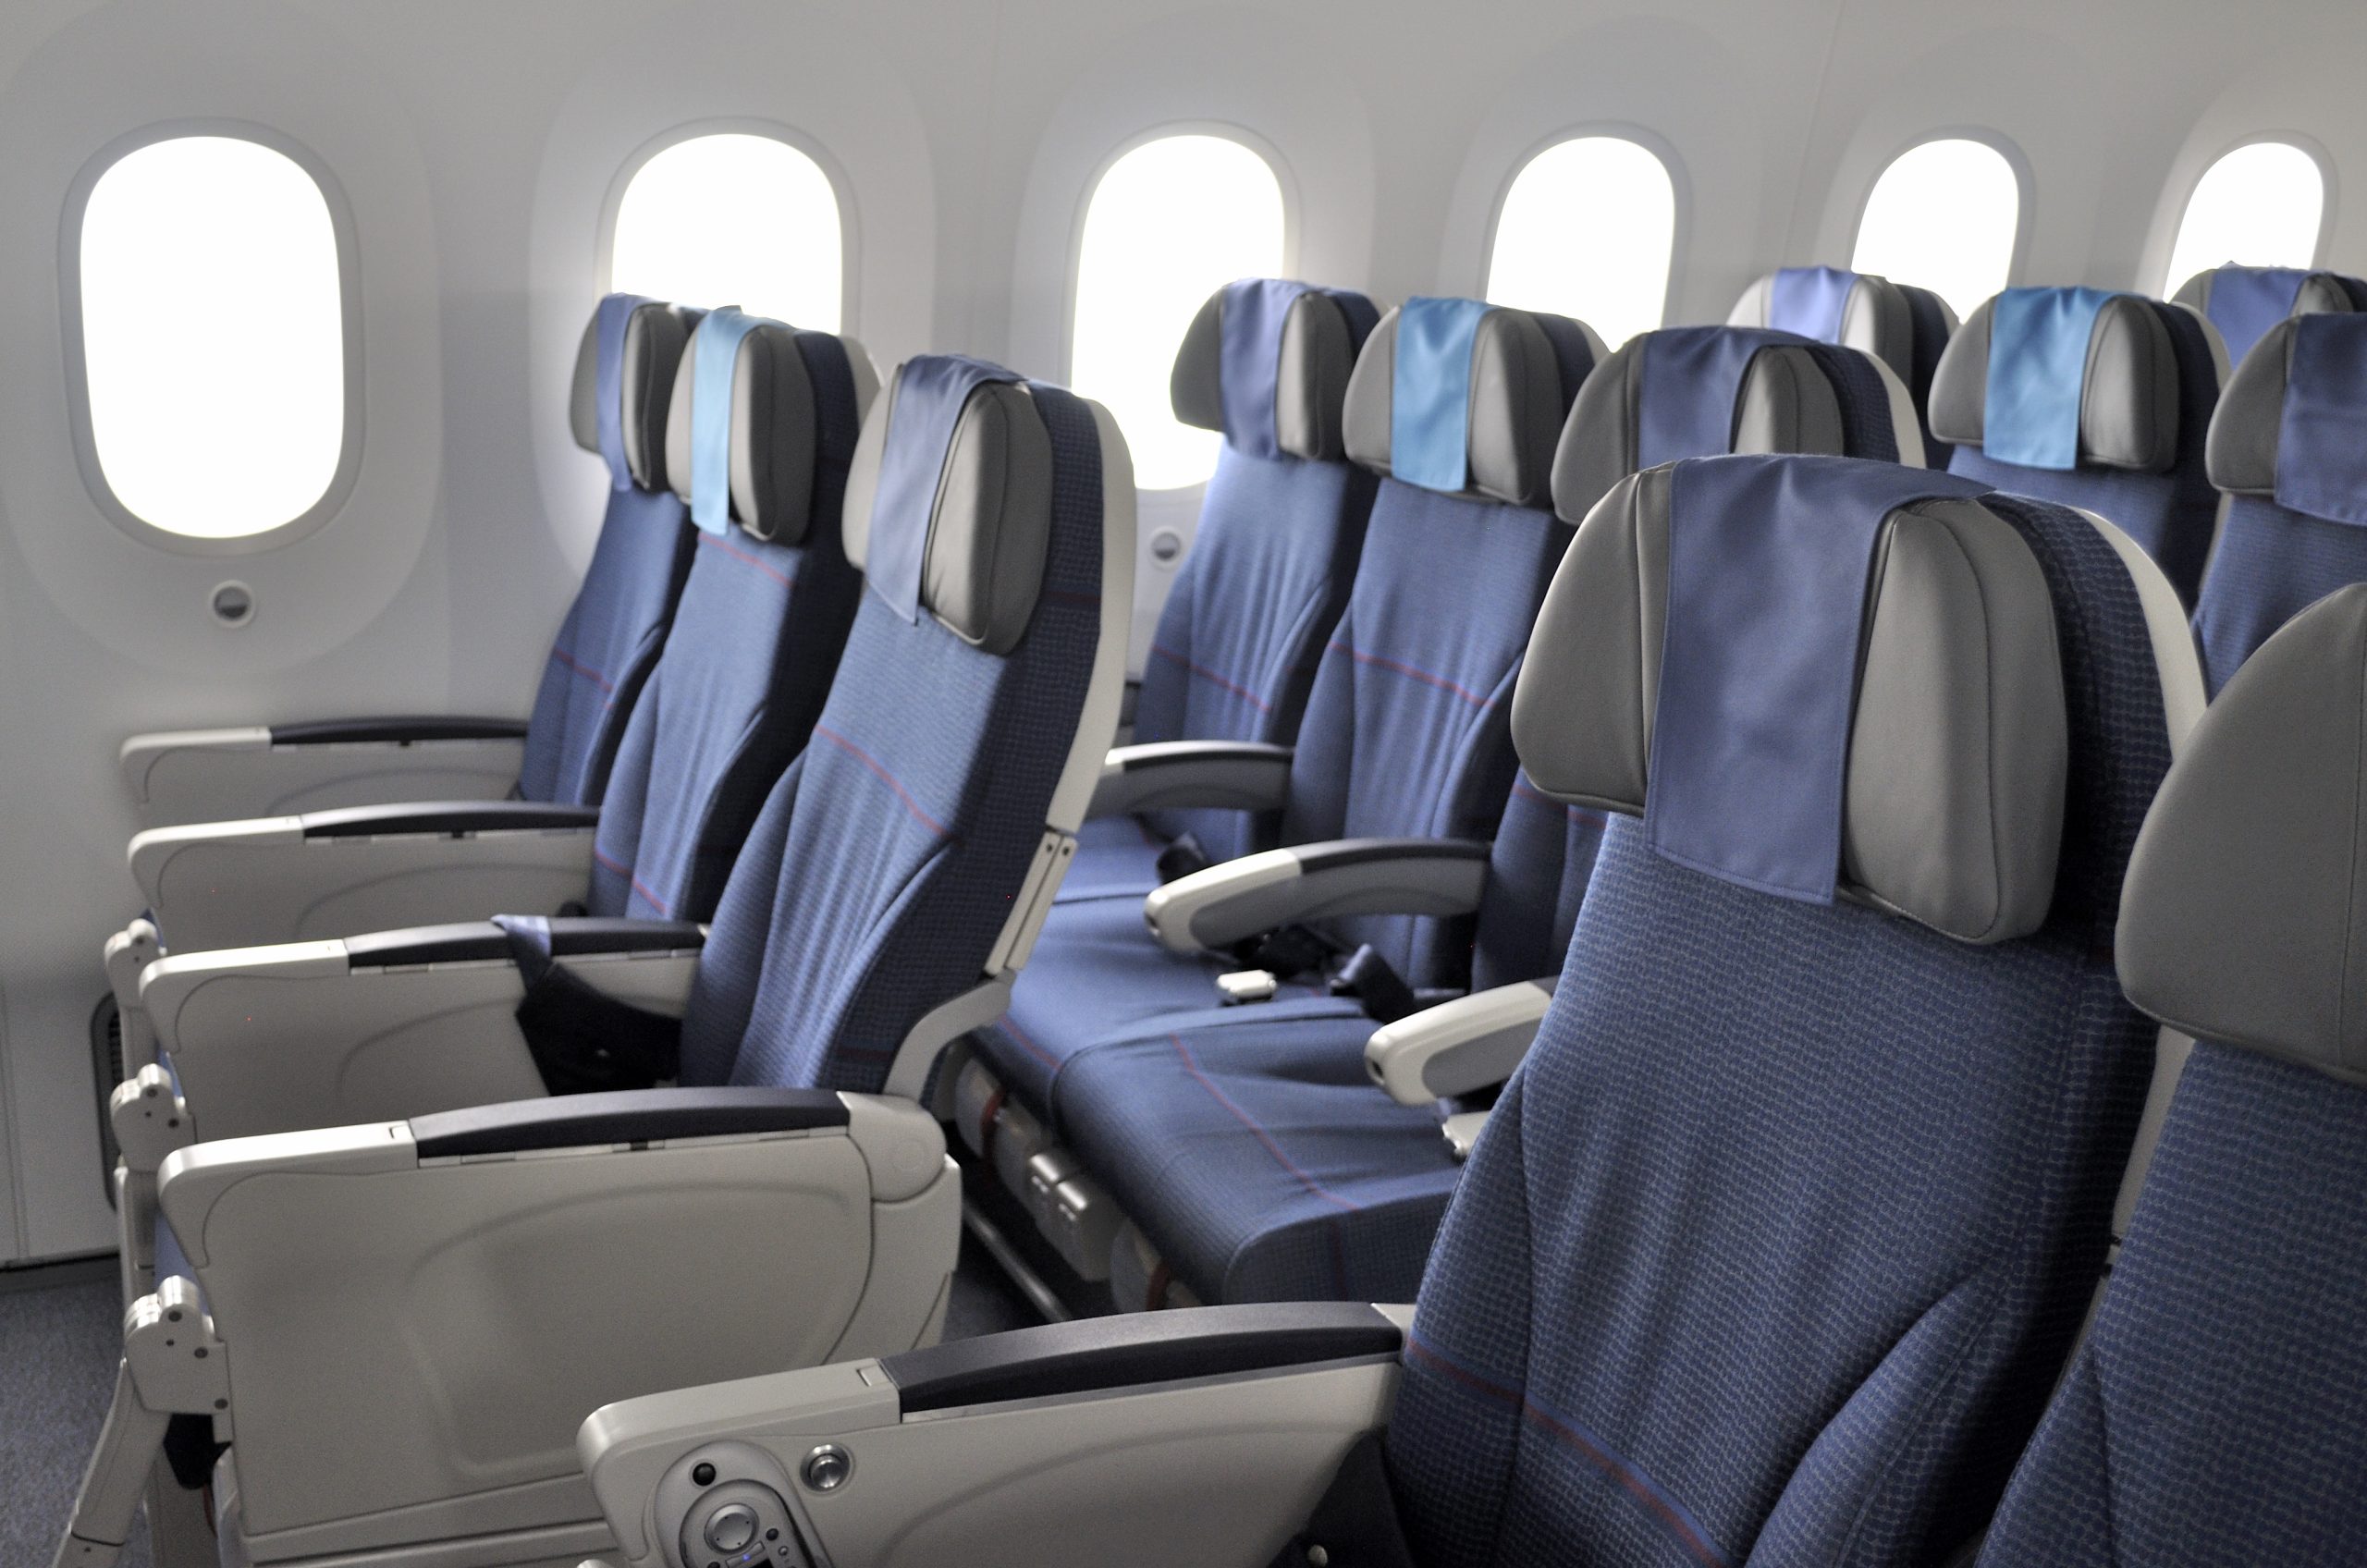 Aυτός είναι ο λόγος που τα καθίσματα στο αεροπλάνο είναι μπλε!